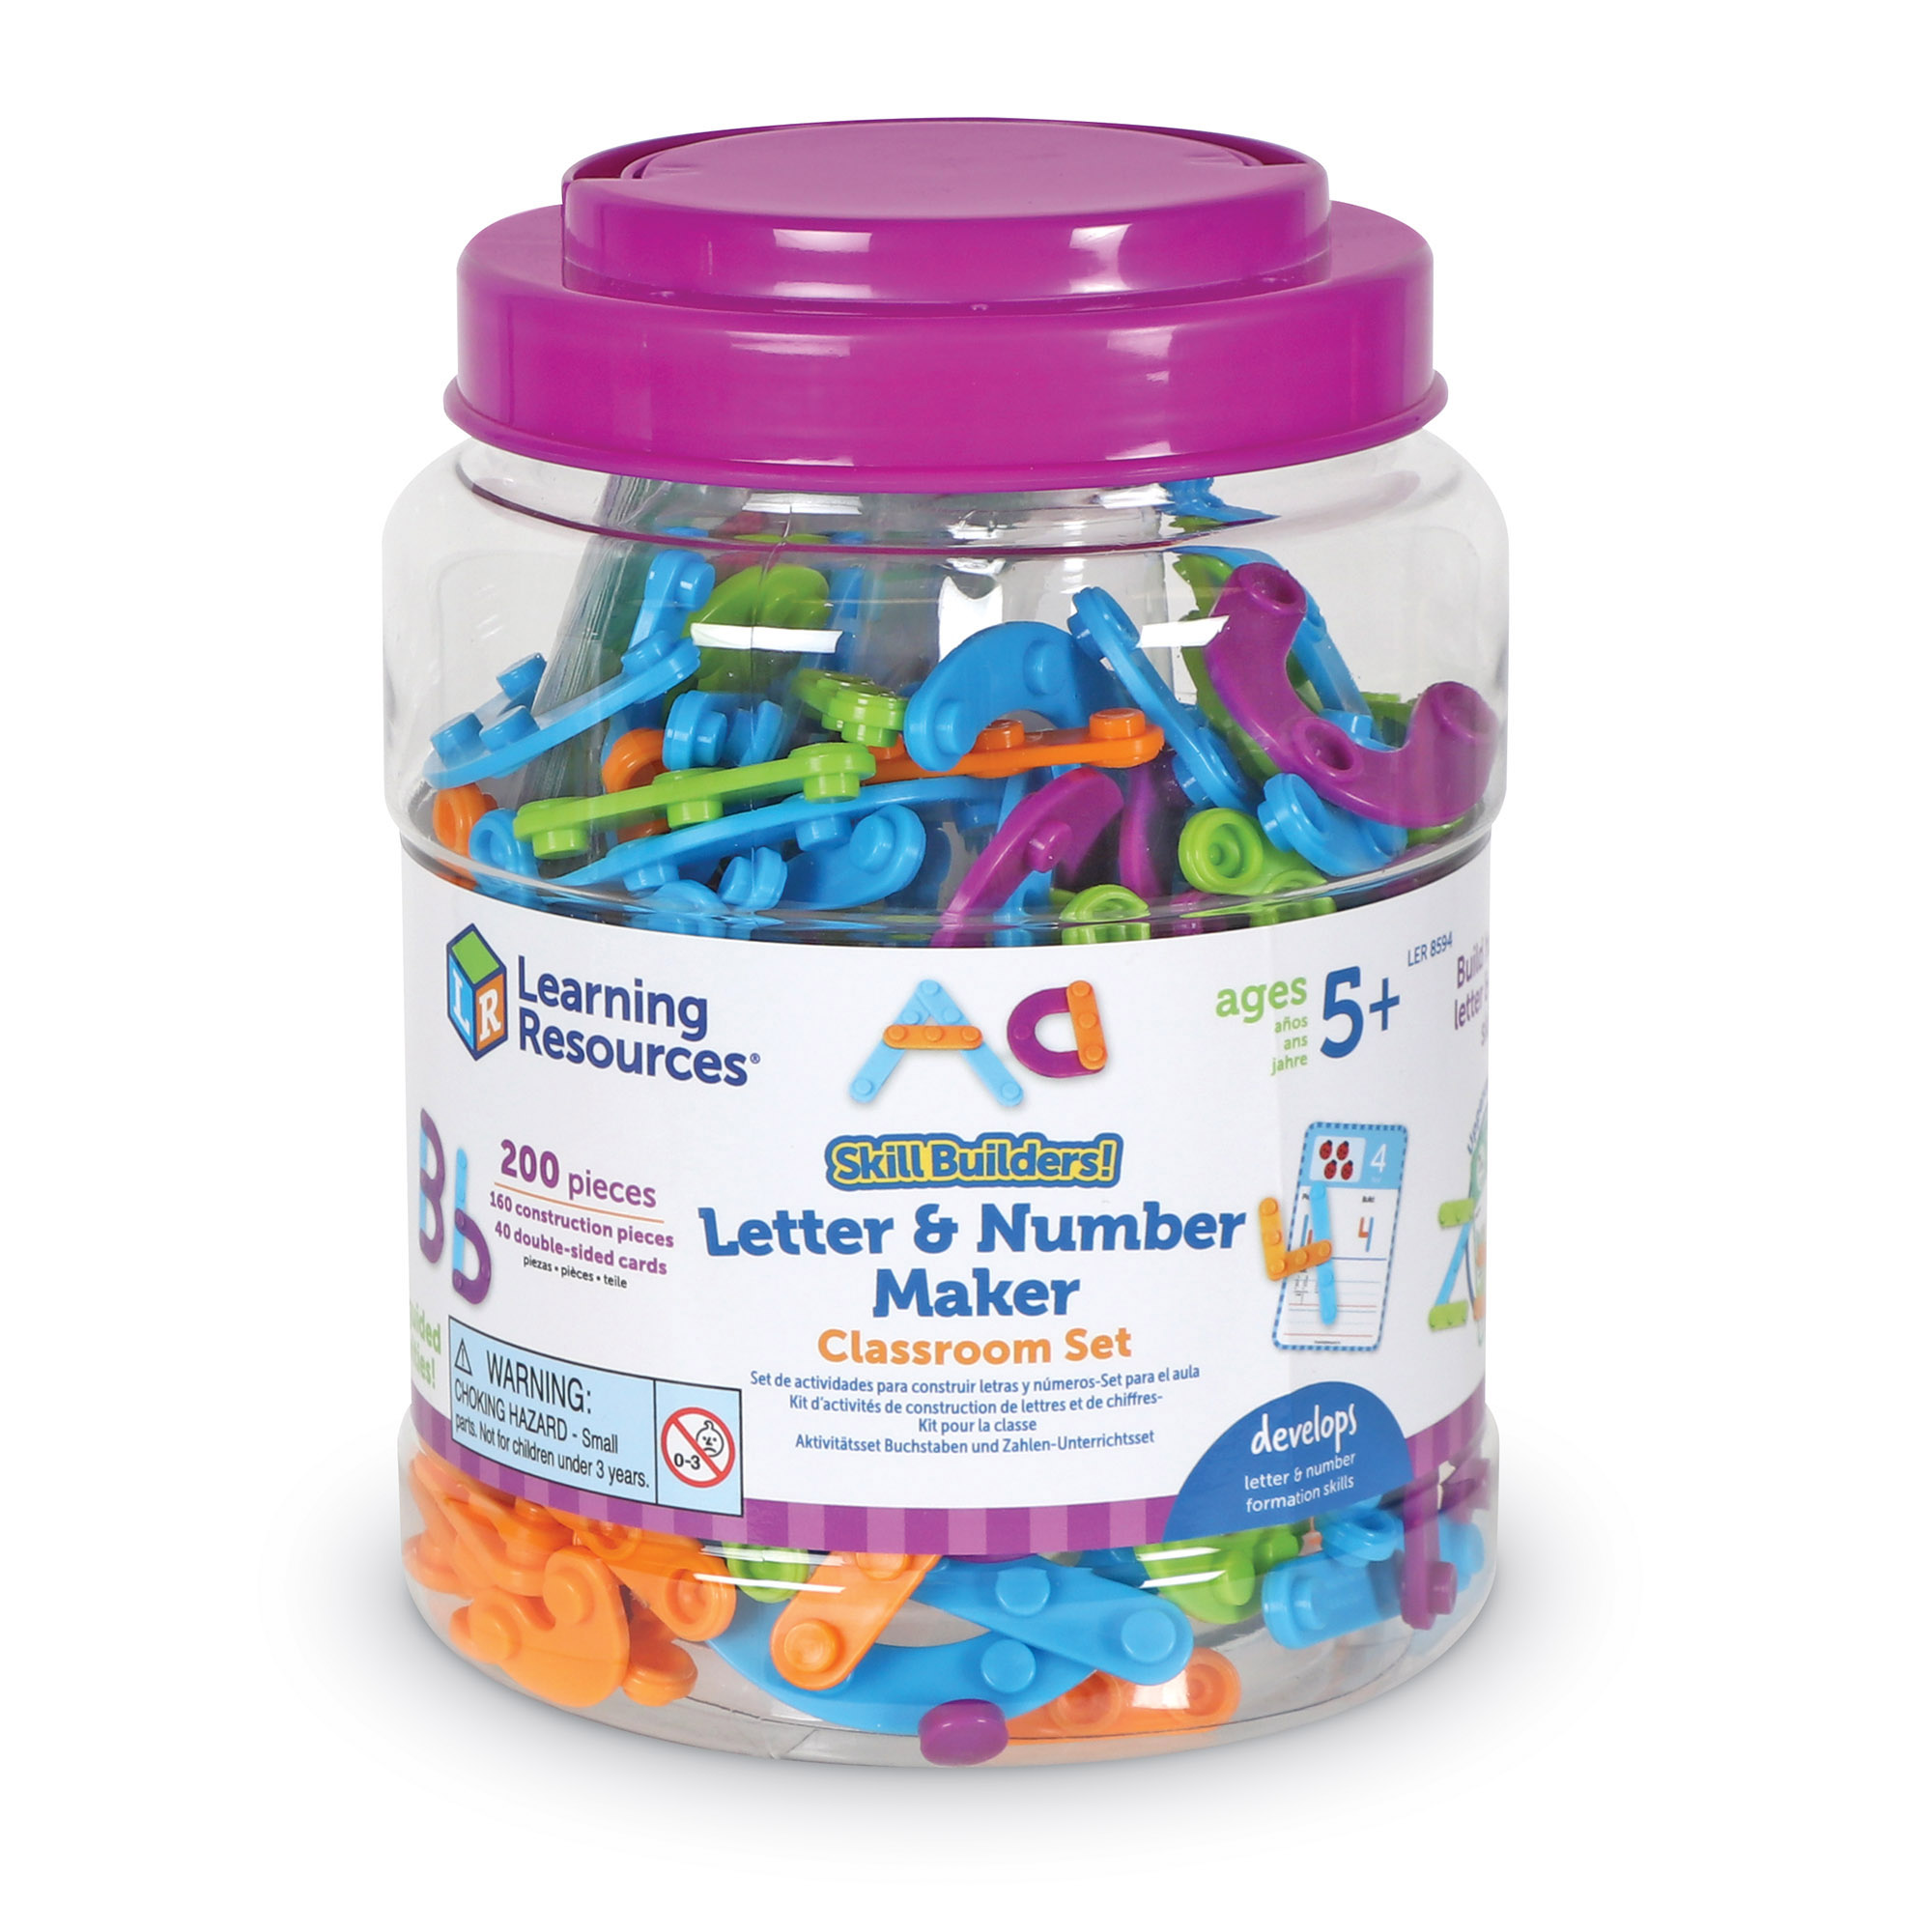 Learning Resources Letter & Number Maker Classroom Set